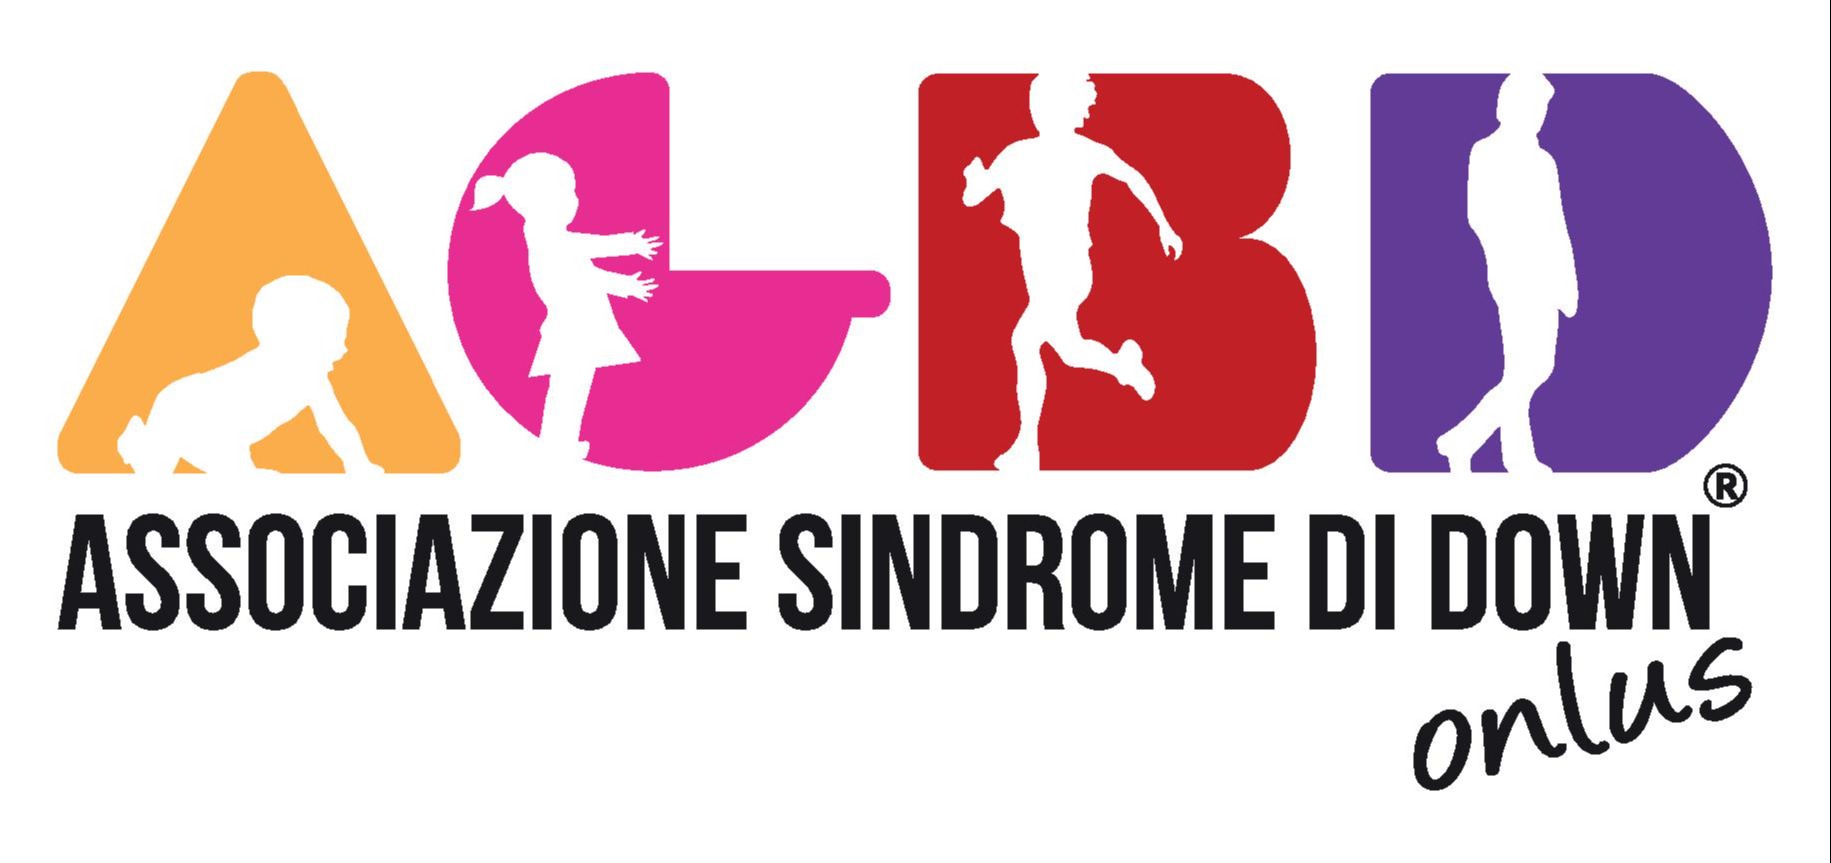 AGBD Associazione Sindrome di Down logo